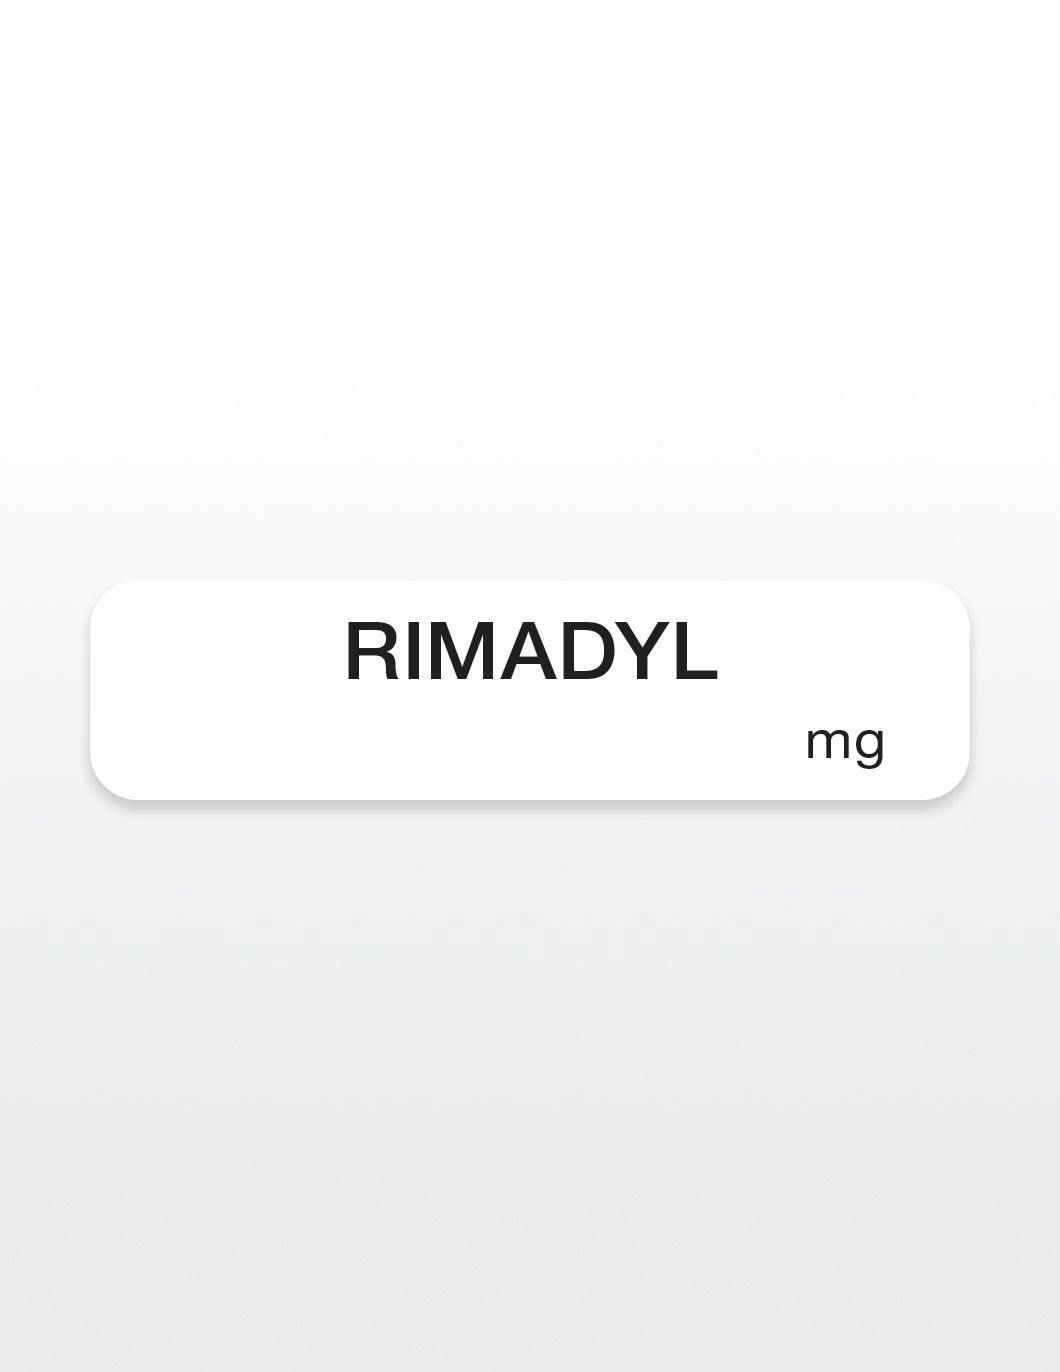 rimadyl-drug-syringe-stickers